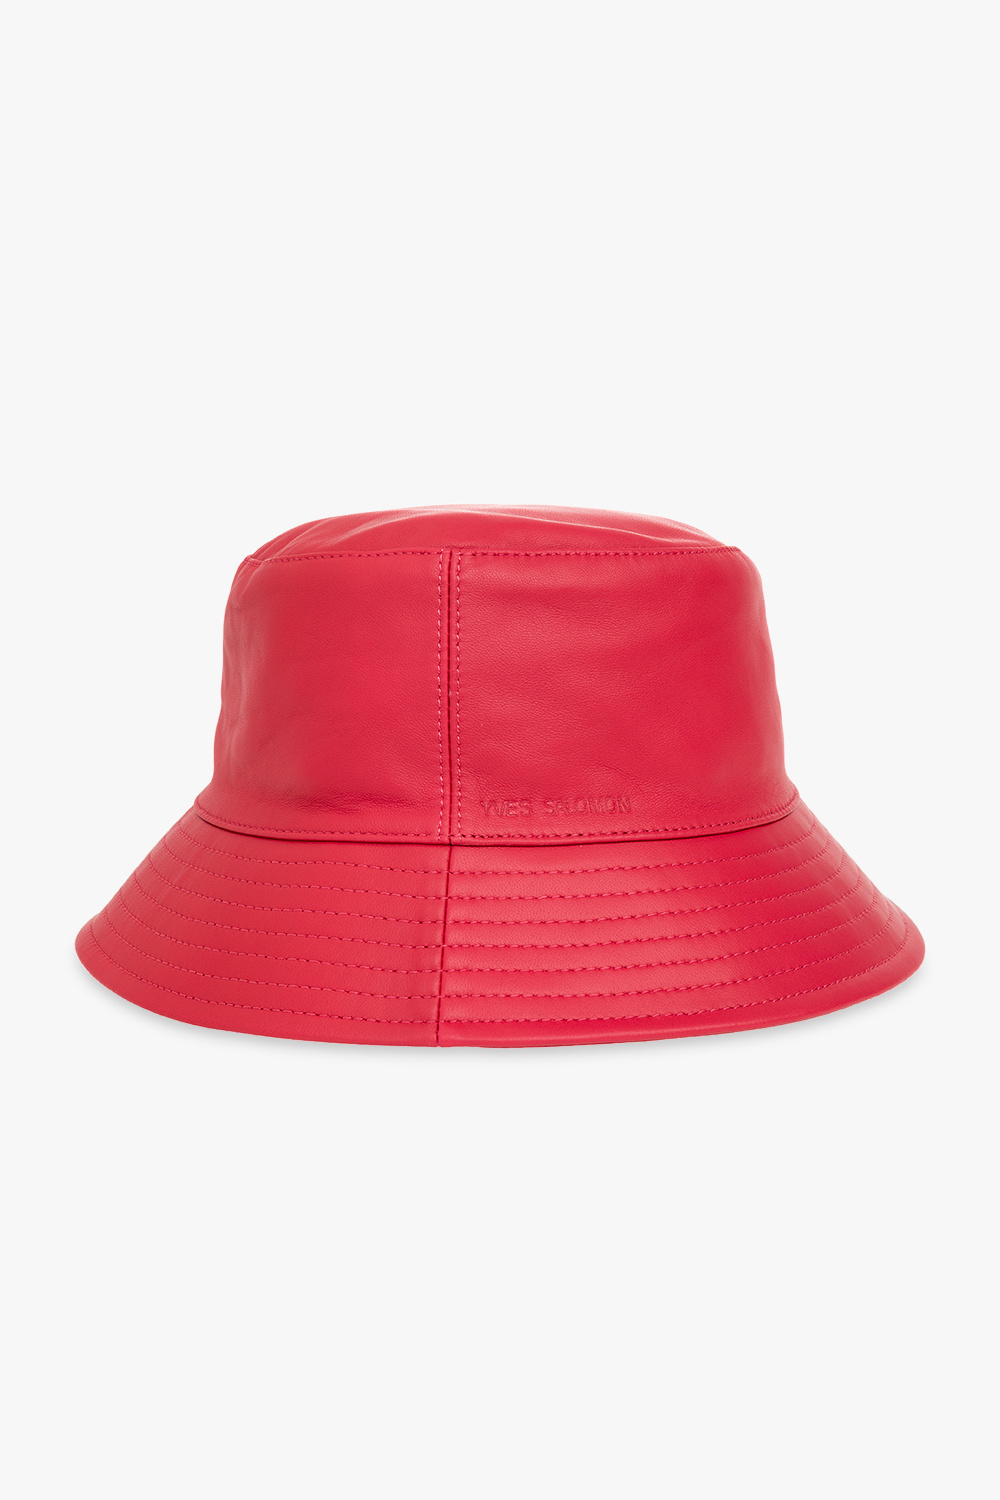 Yves Salomon Dorfman-Pacific Carina Lifeguard Hat